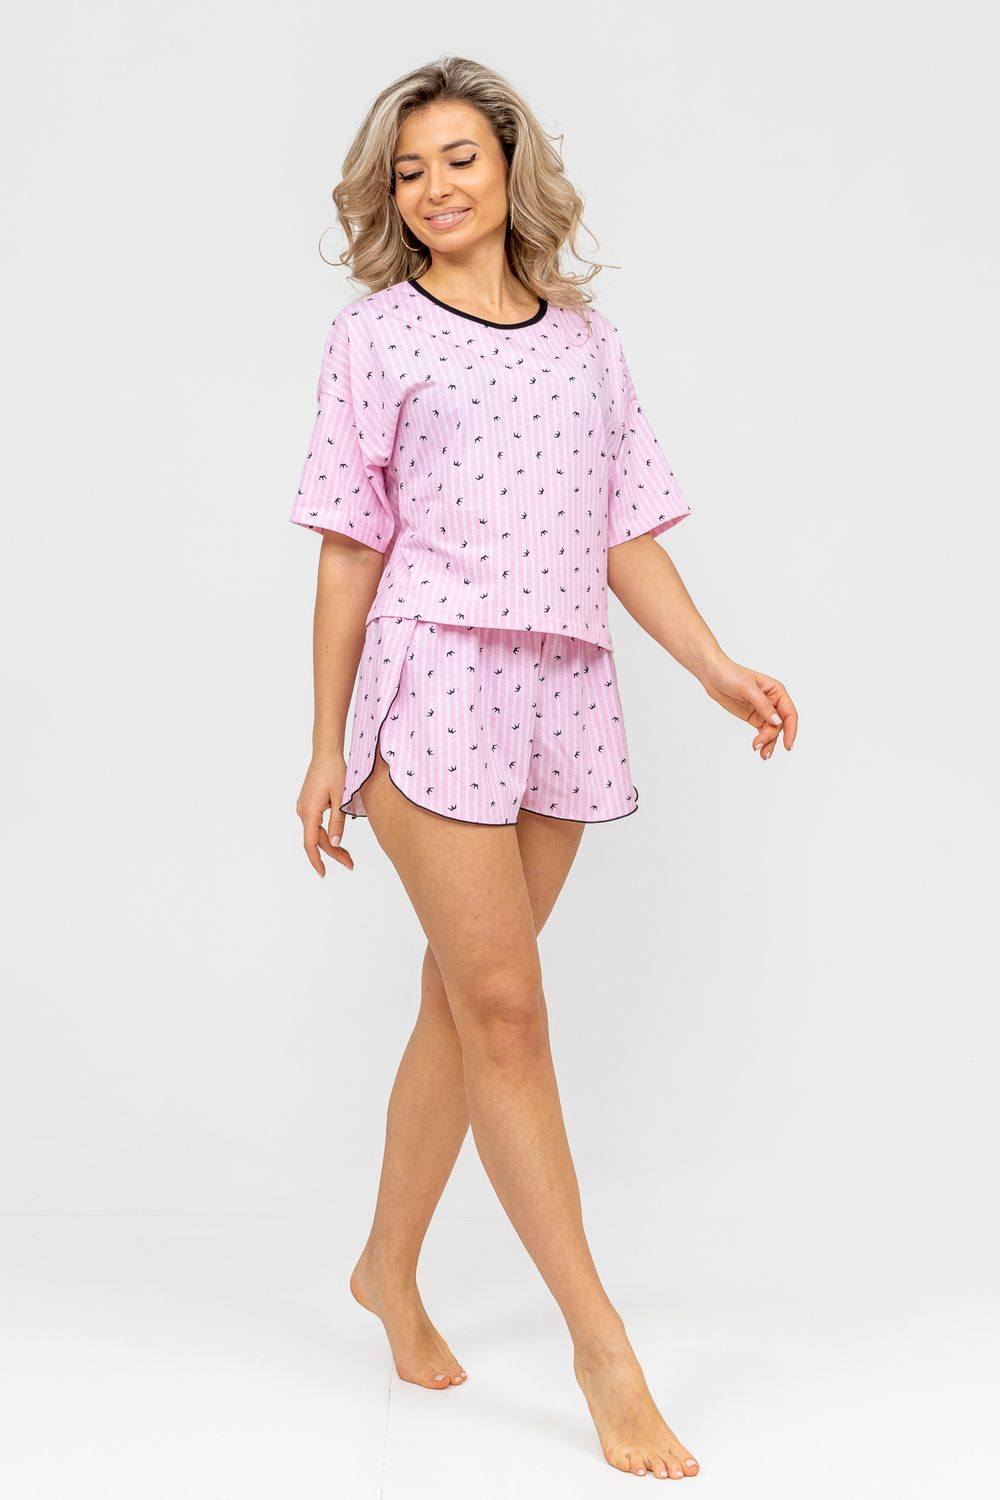 Пижама женская с шортами. Артикул 000005328